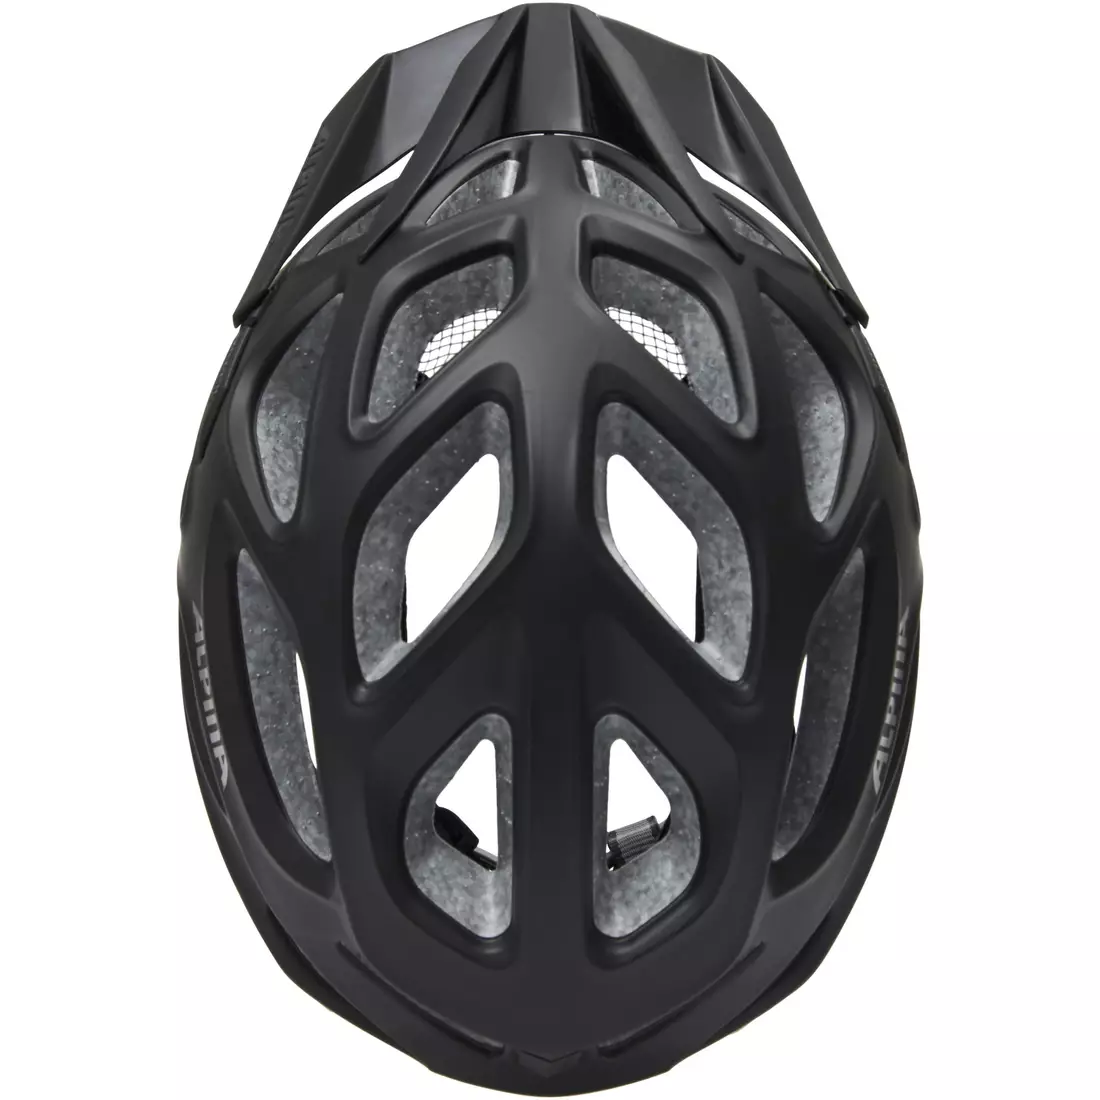 ALPINA MYTHOS 3.0 L.E bicycle helmet Black matt